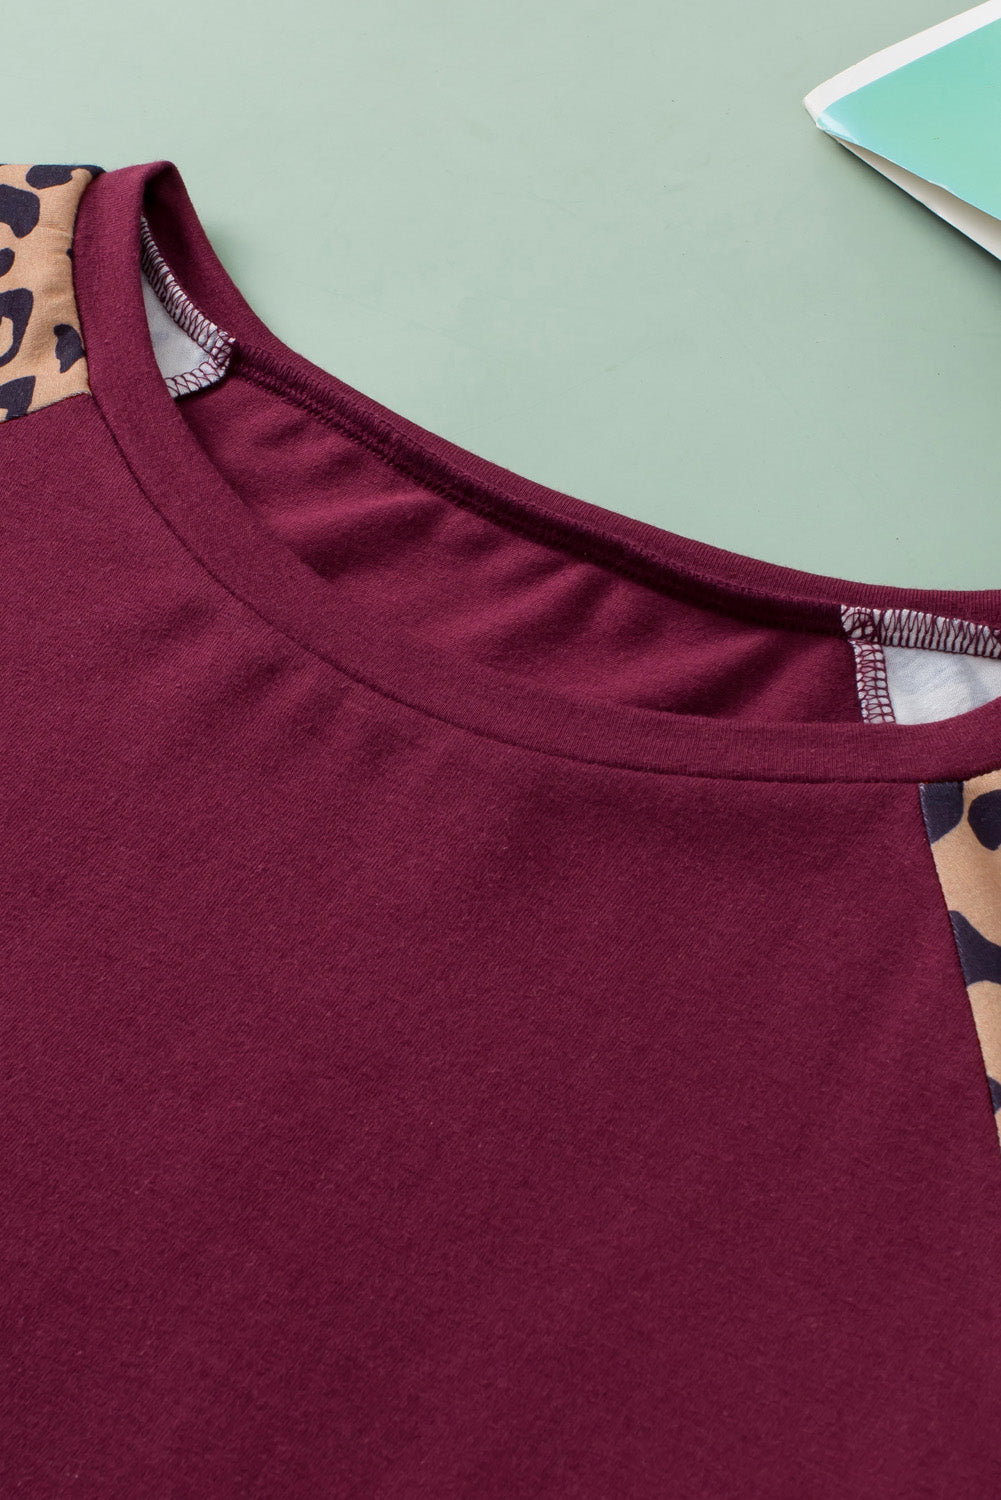 Burgundy Contrast Leopard Raglan Sleeve Plus Size T-shirt